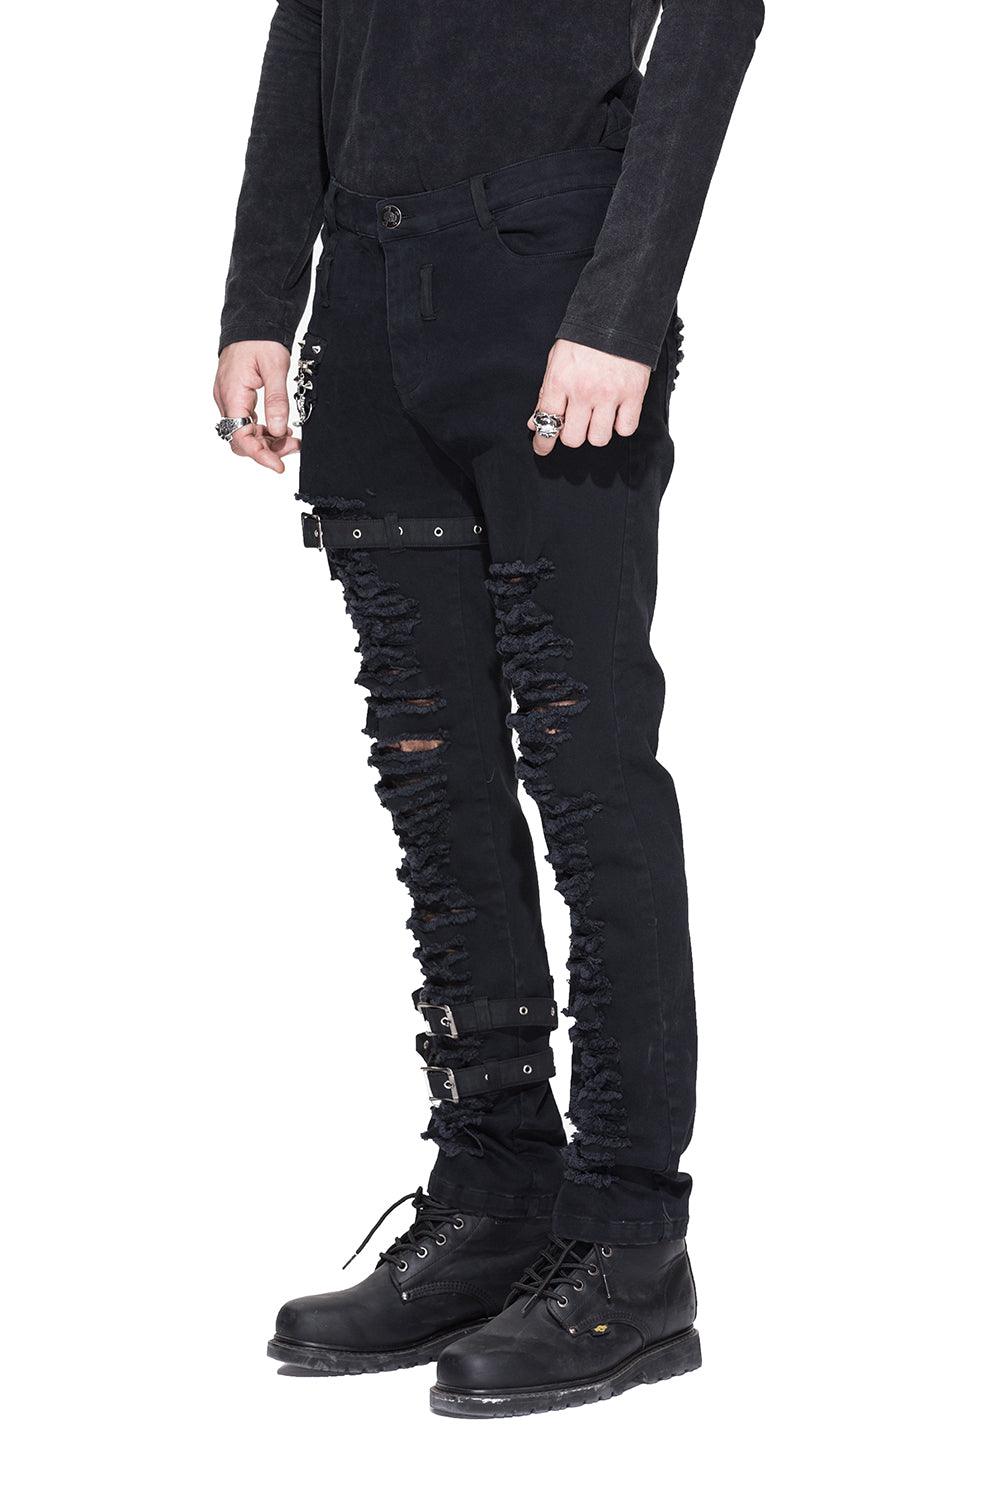 Devil Fashion Black Death Pants - VampireFreaks